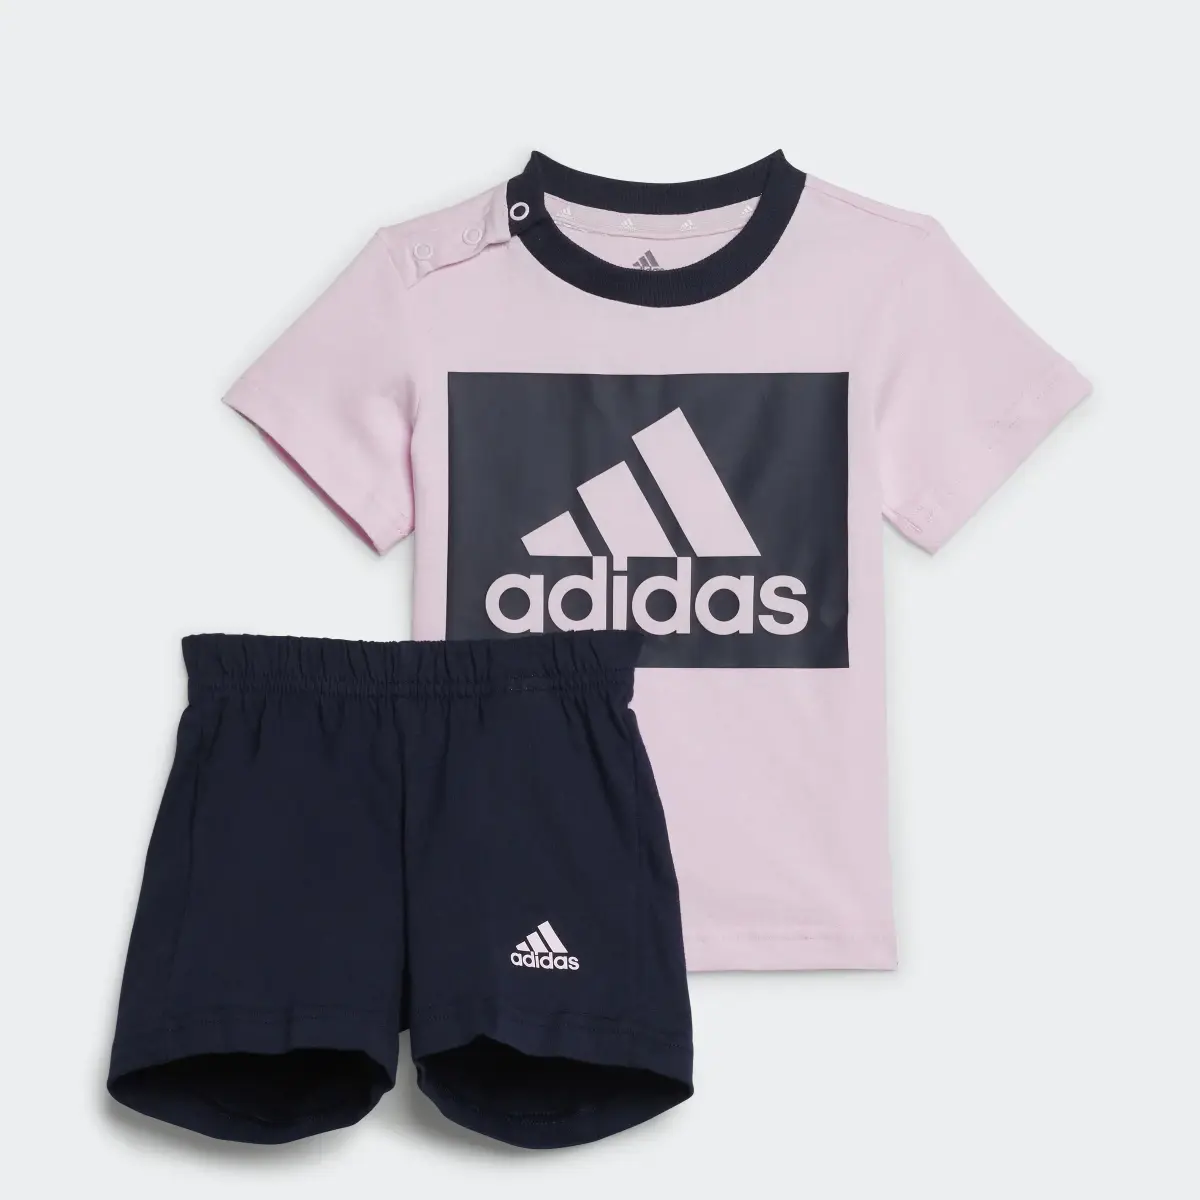 Adidas Essentials Tee and Shorts Set. 1